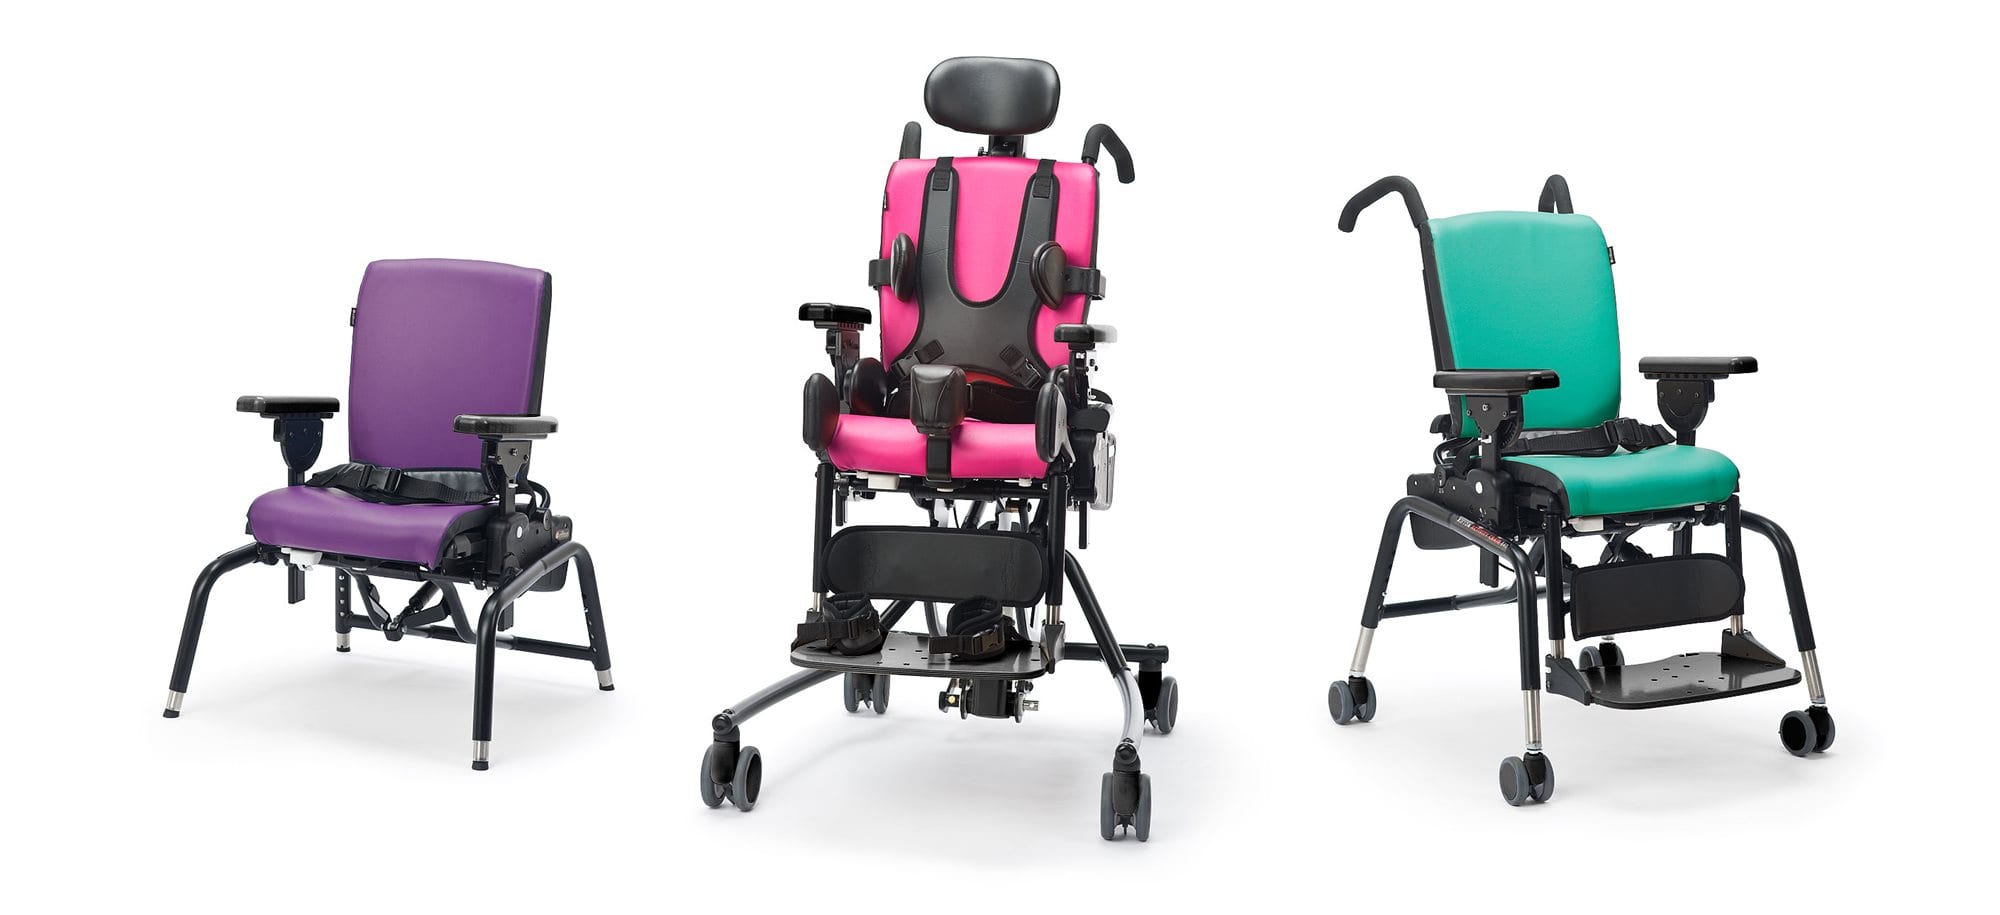 Стул для дцп. Коляска инвалидная Рифтон. Rifton activity Chair. Фламинго стул для ДЦП. Кресло для купания ДЦП Рифтон.